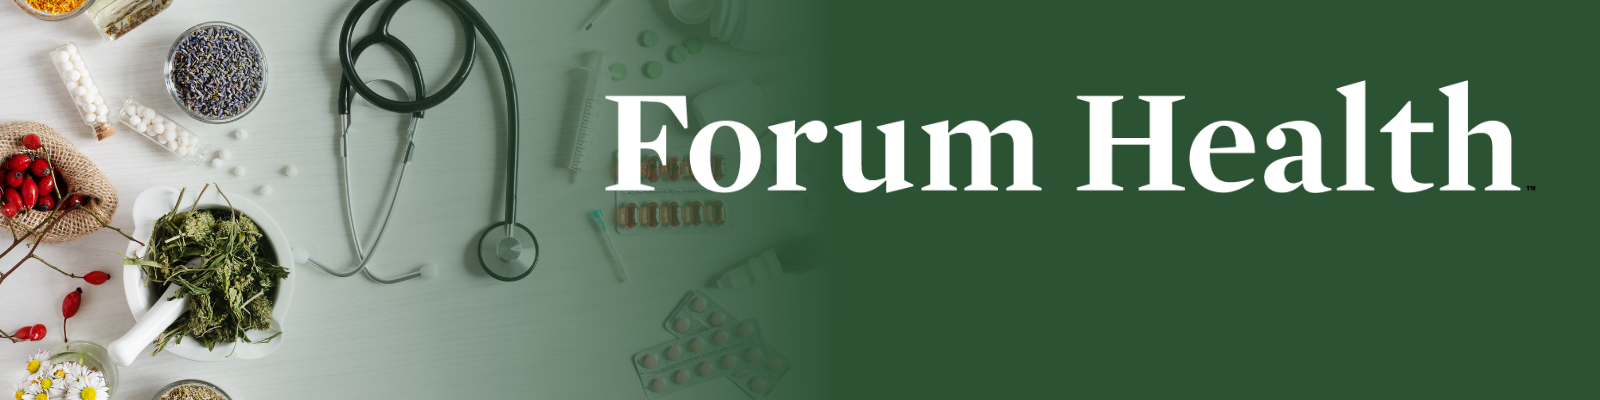 Forum Health Integrative Medicine Provider Network Podcast